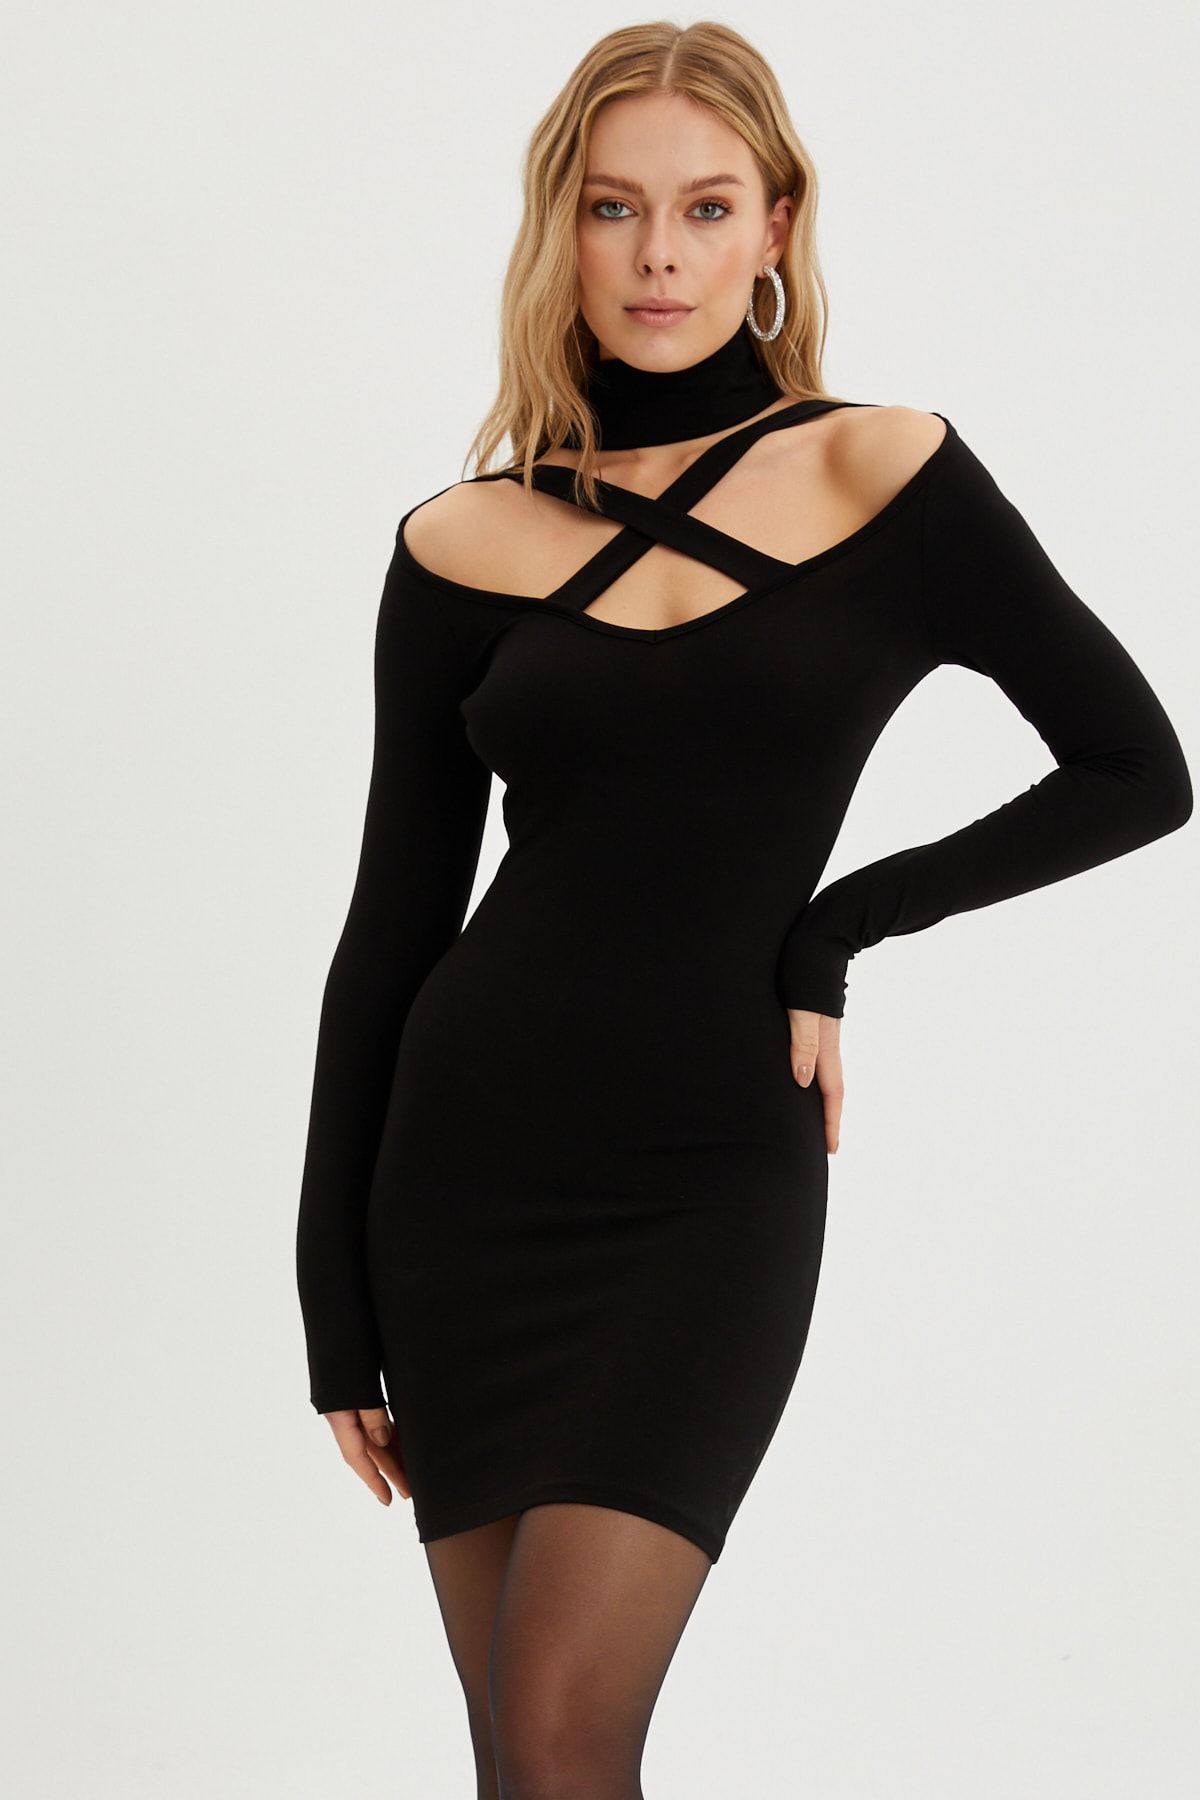 Cool & Sexy Kadın Siyah Önü Çapraz Mini Elbise B181-9